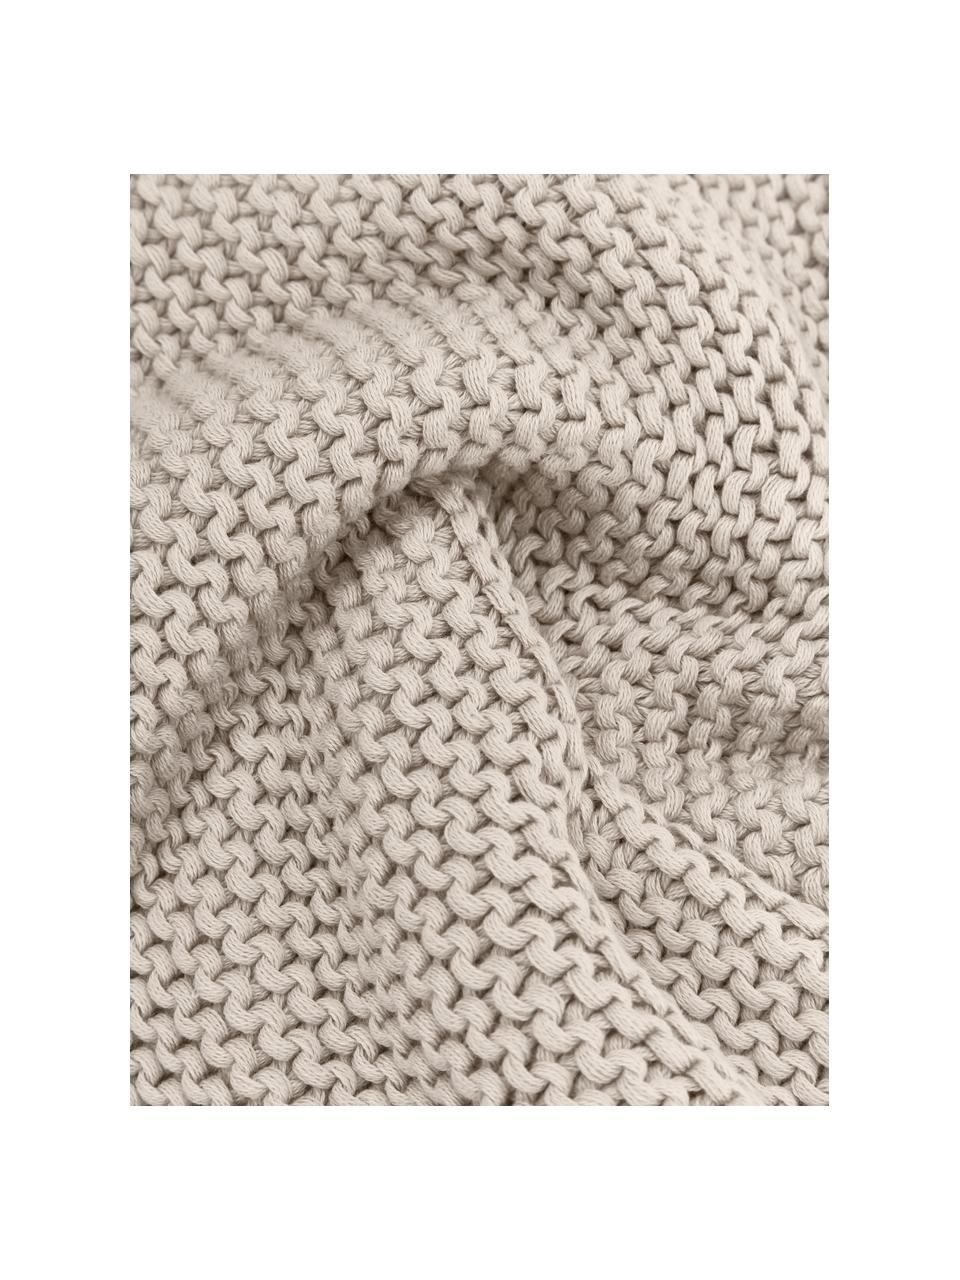 Strick-Kissenhülle Adalyn aus Bio-Baumwolle in Beige, 100% Bio-Baumwolle, GOTS-zertifiziert, Beige, B 40 x L 40 cm